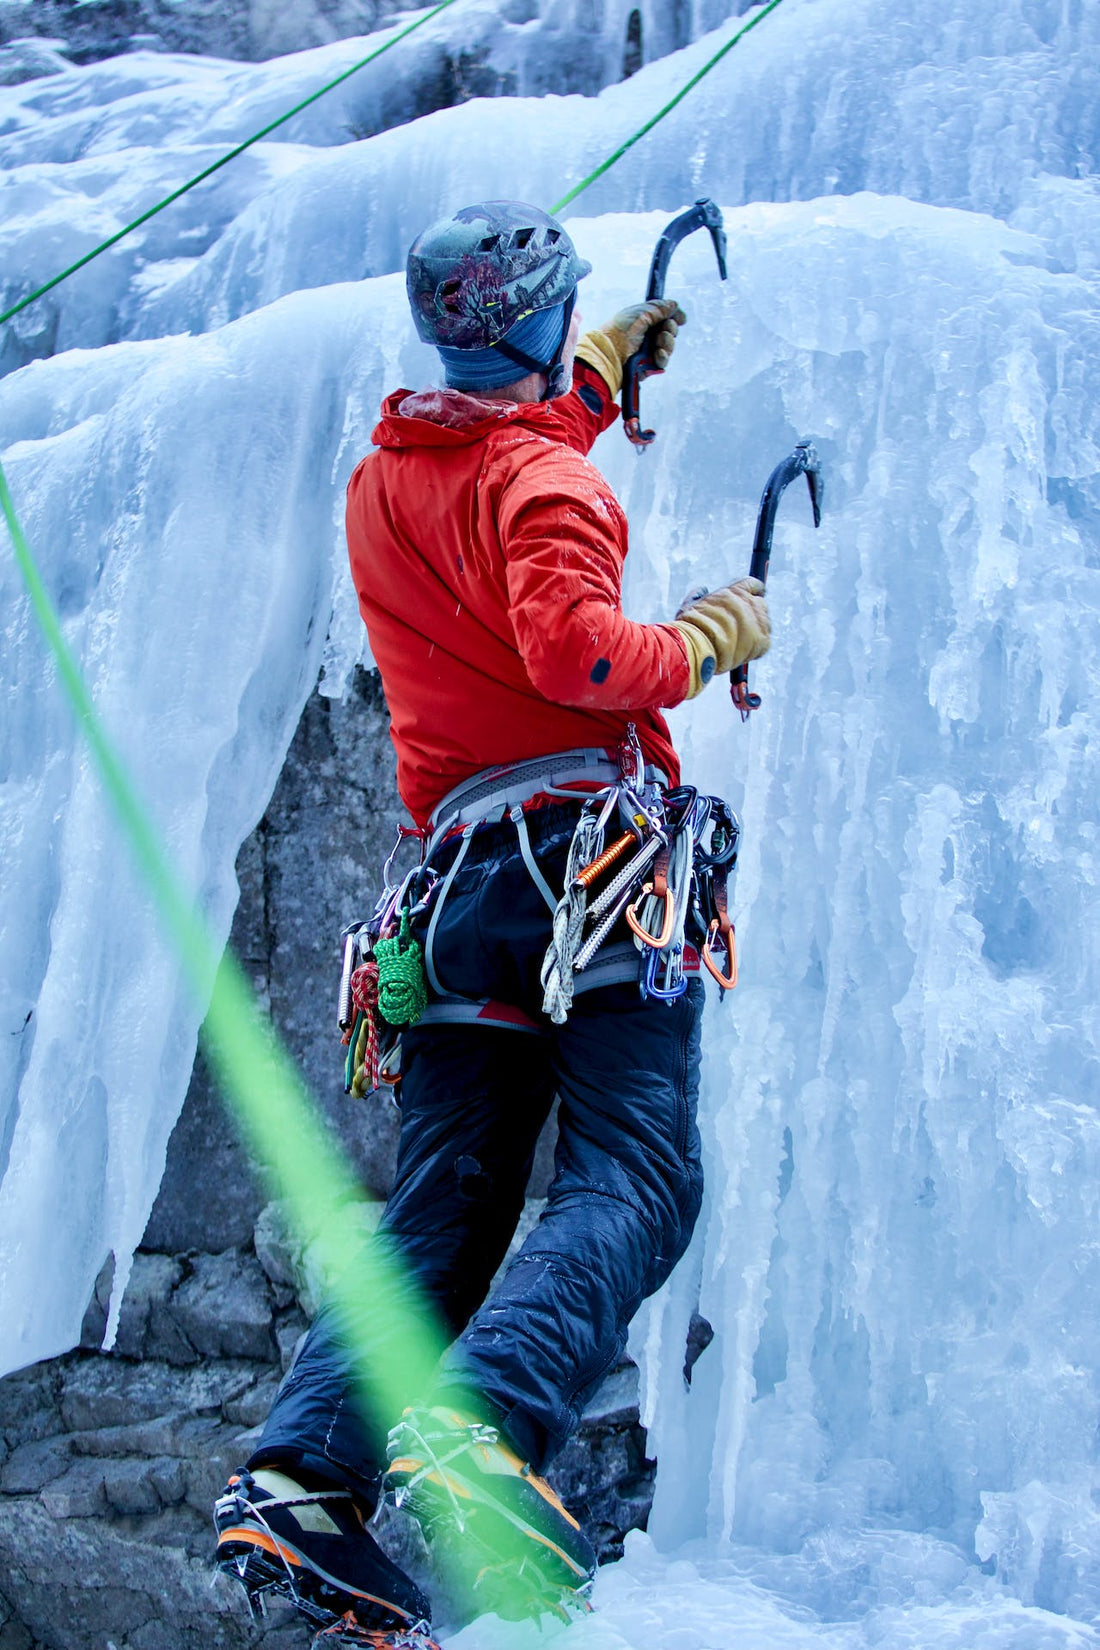 How do ice climbing grades work?